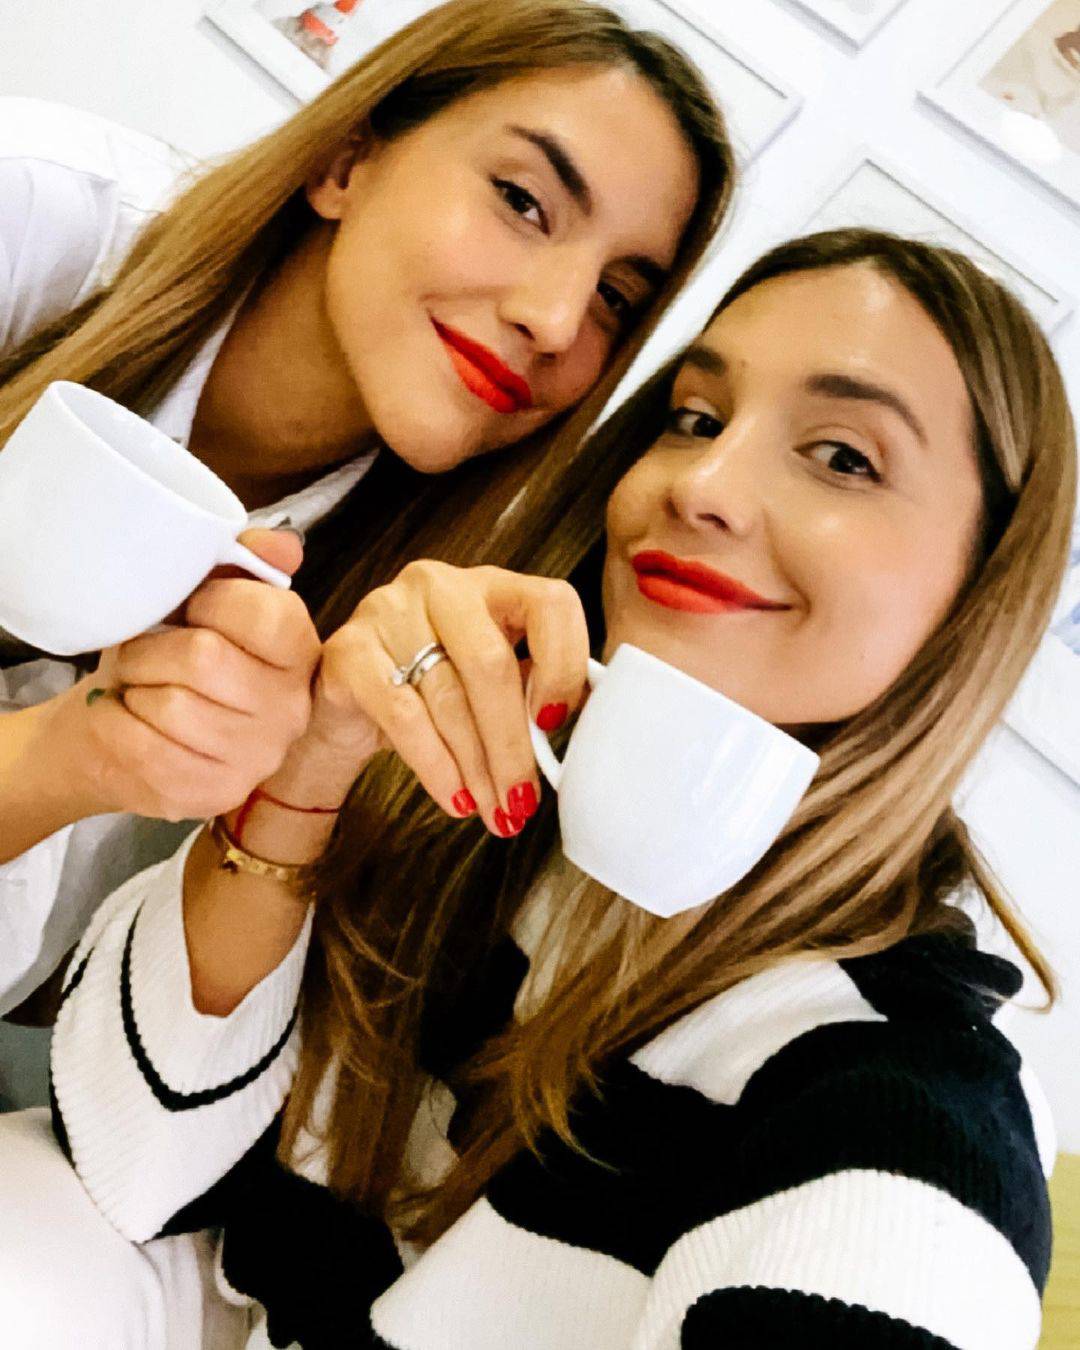 Marijana Batinić objavila fotku s mlađom sestrom: 'Vas dvije skroz iste, prave ste ljepotice'